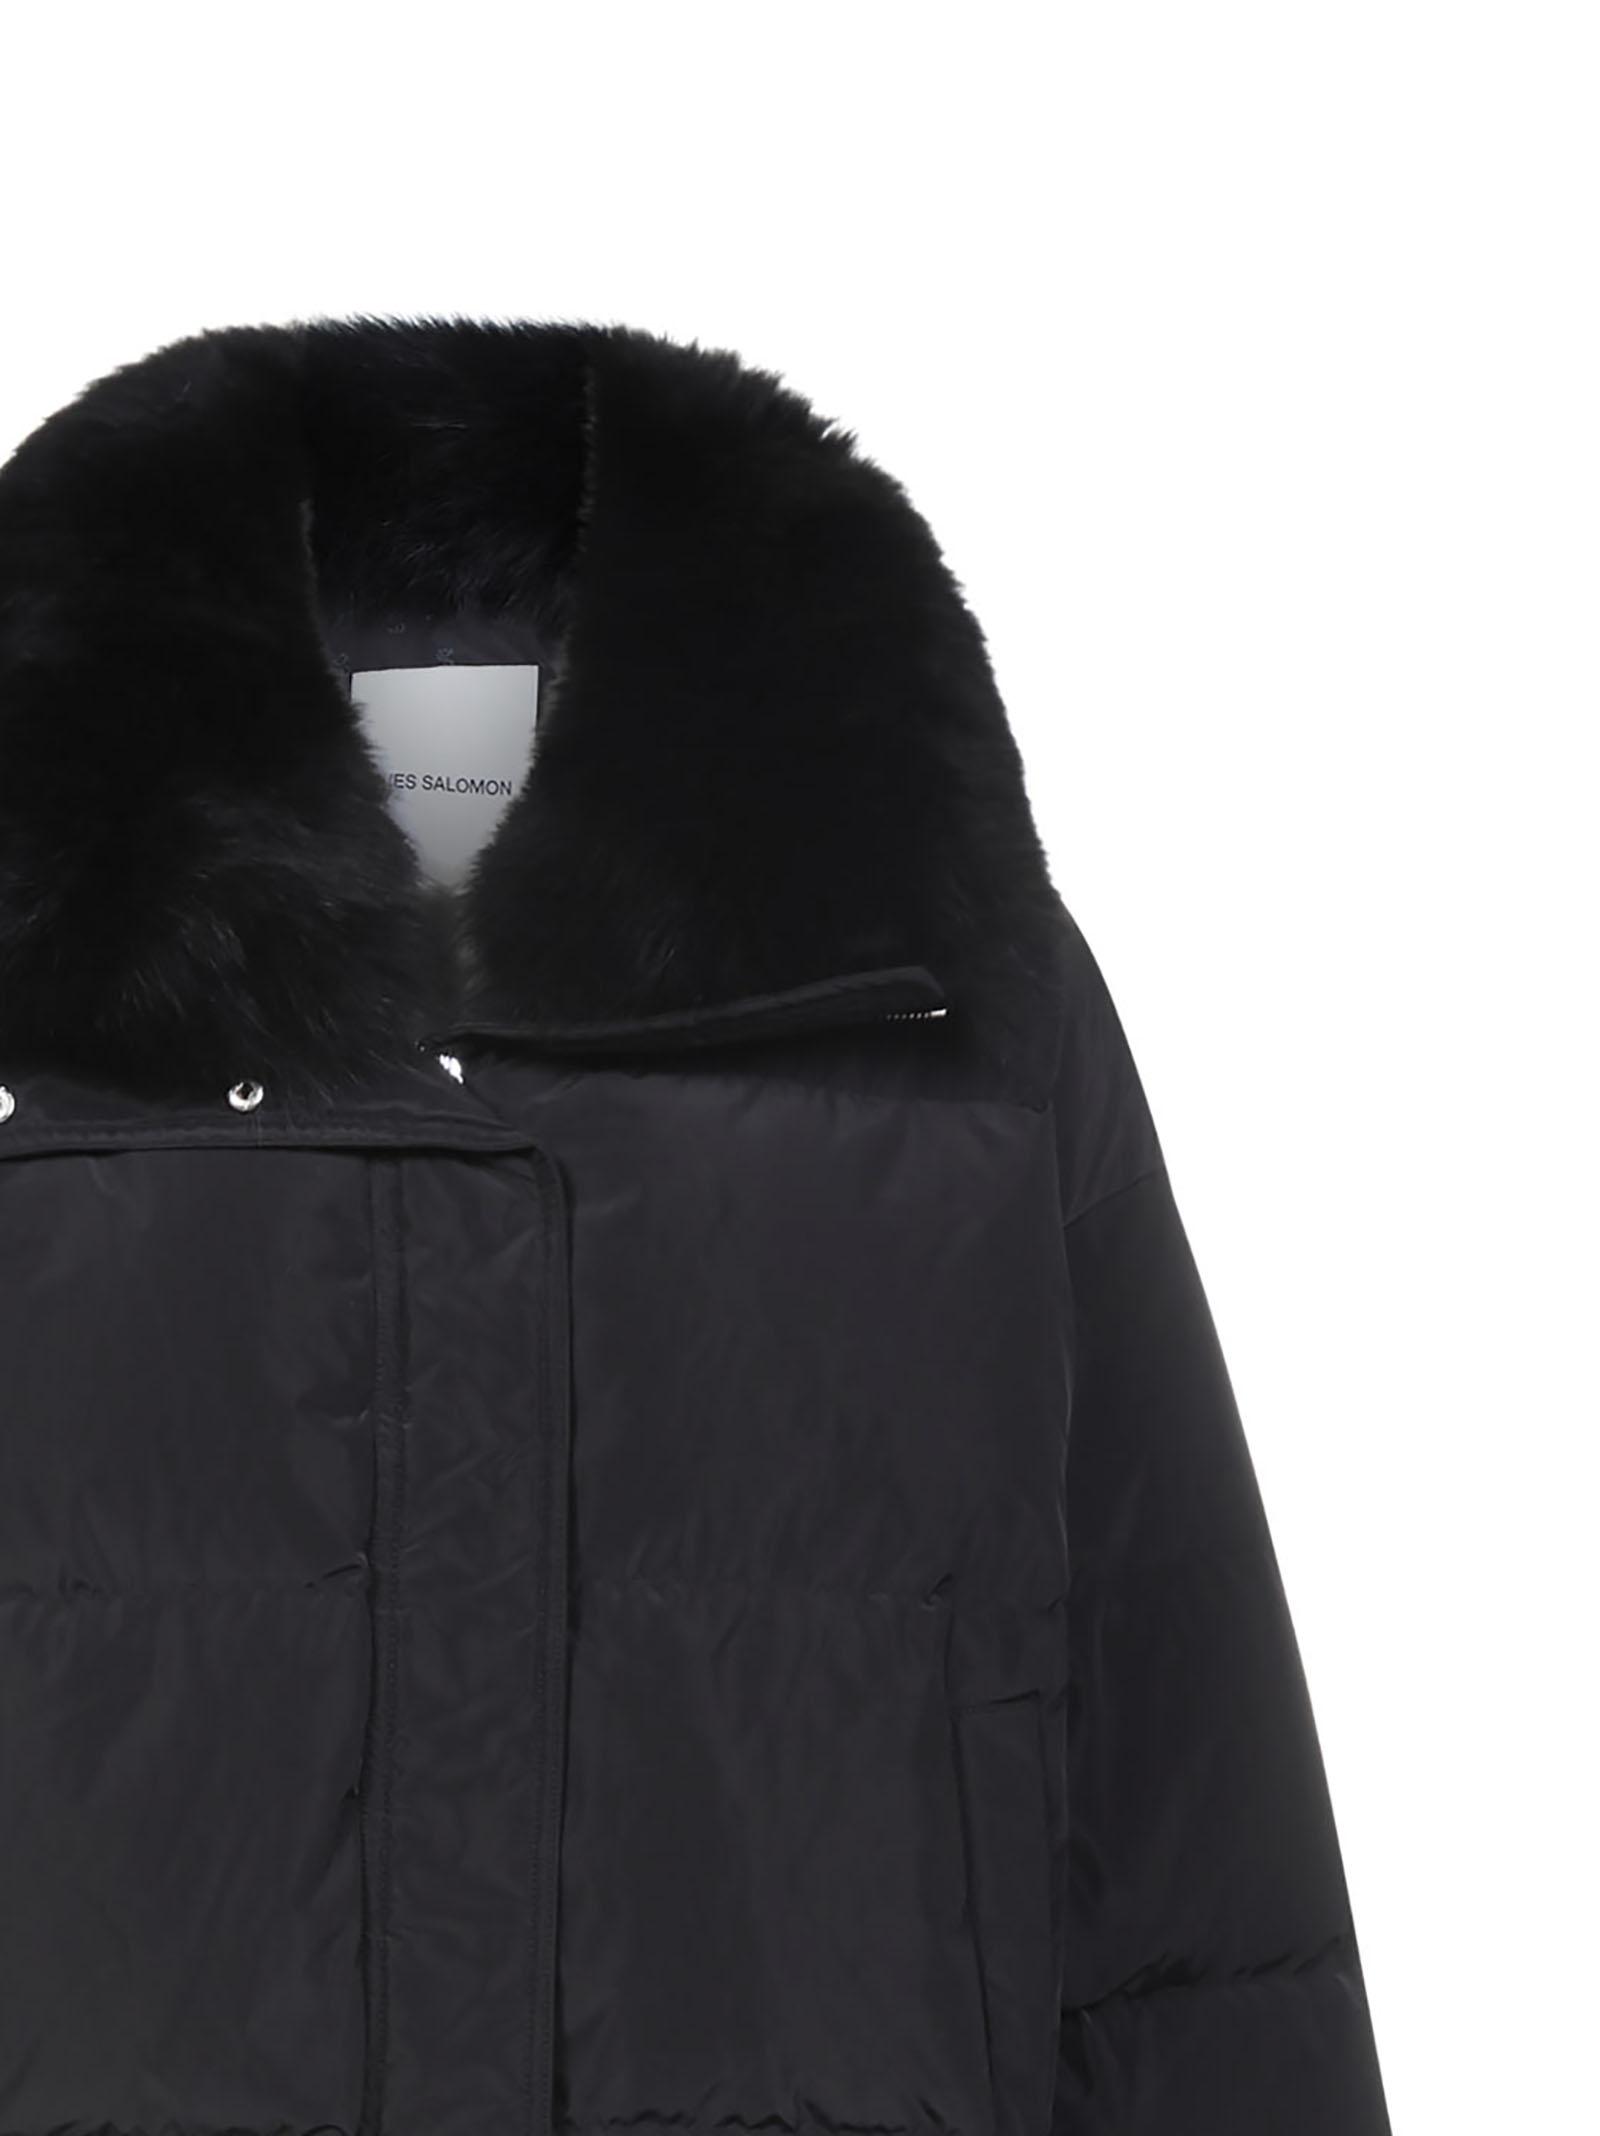 Yves Salomon Fur Down Jacket in Black - Save 6% | Lyst